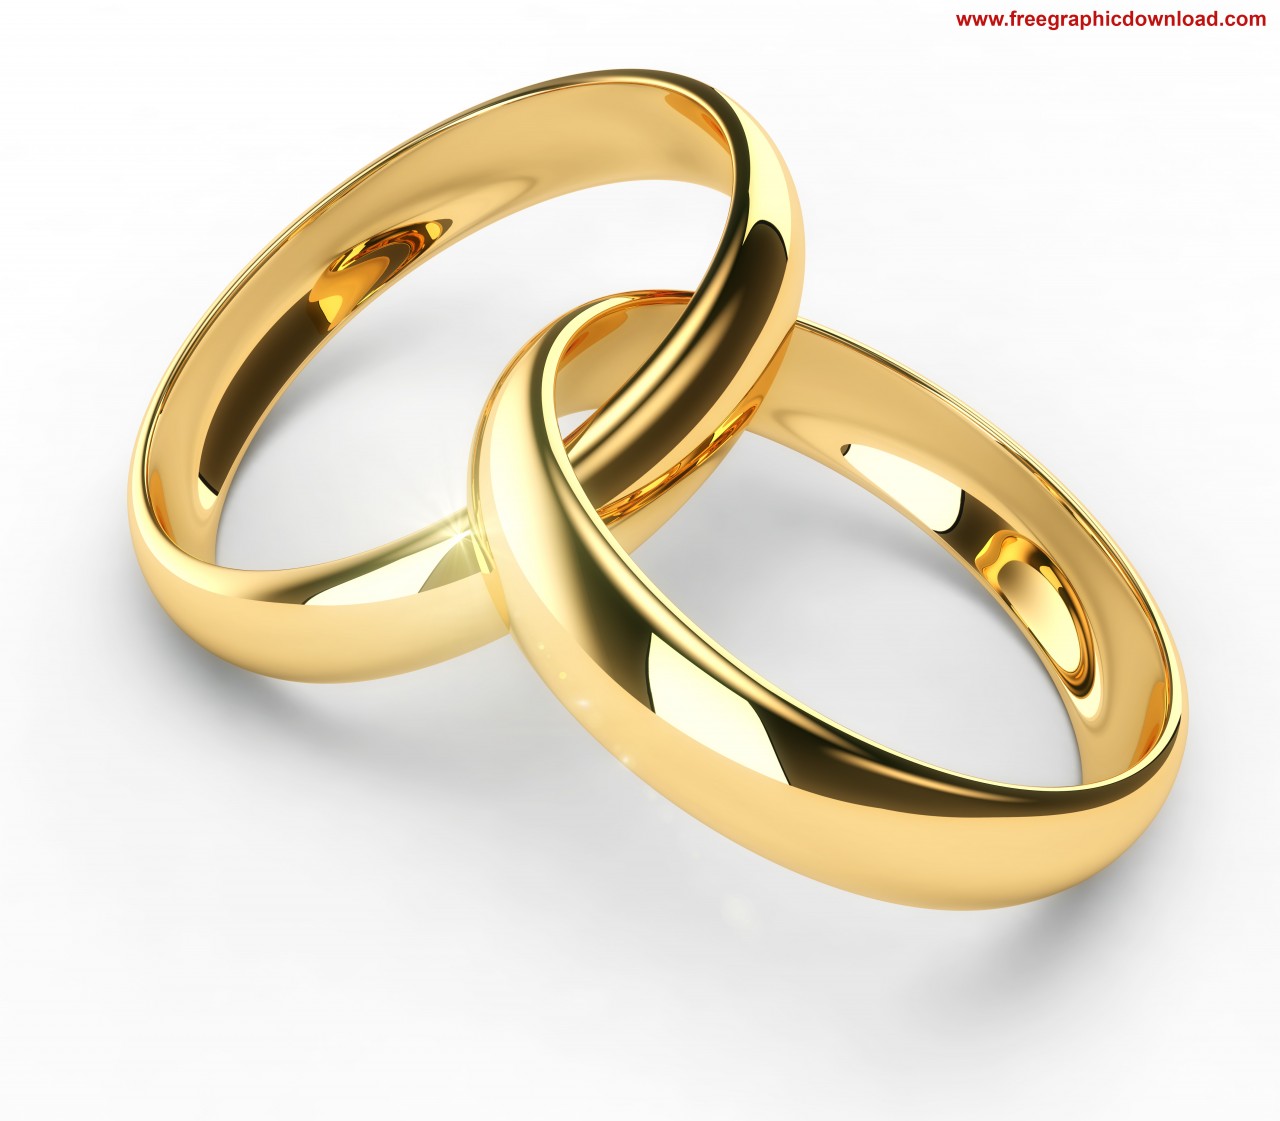 Two Wedding Rings